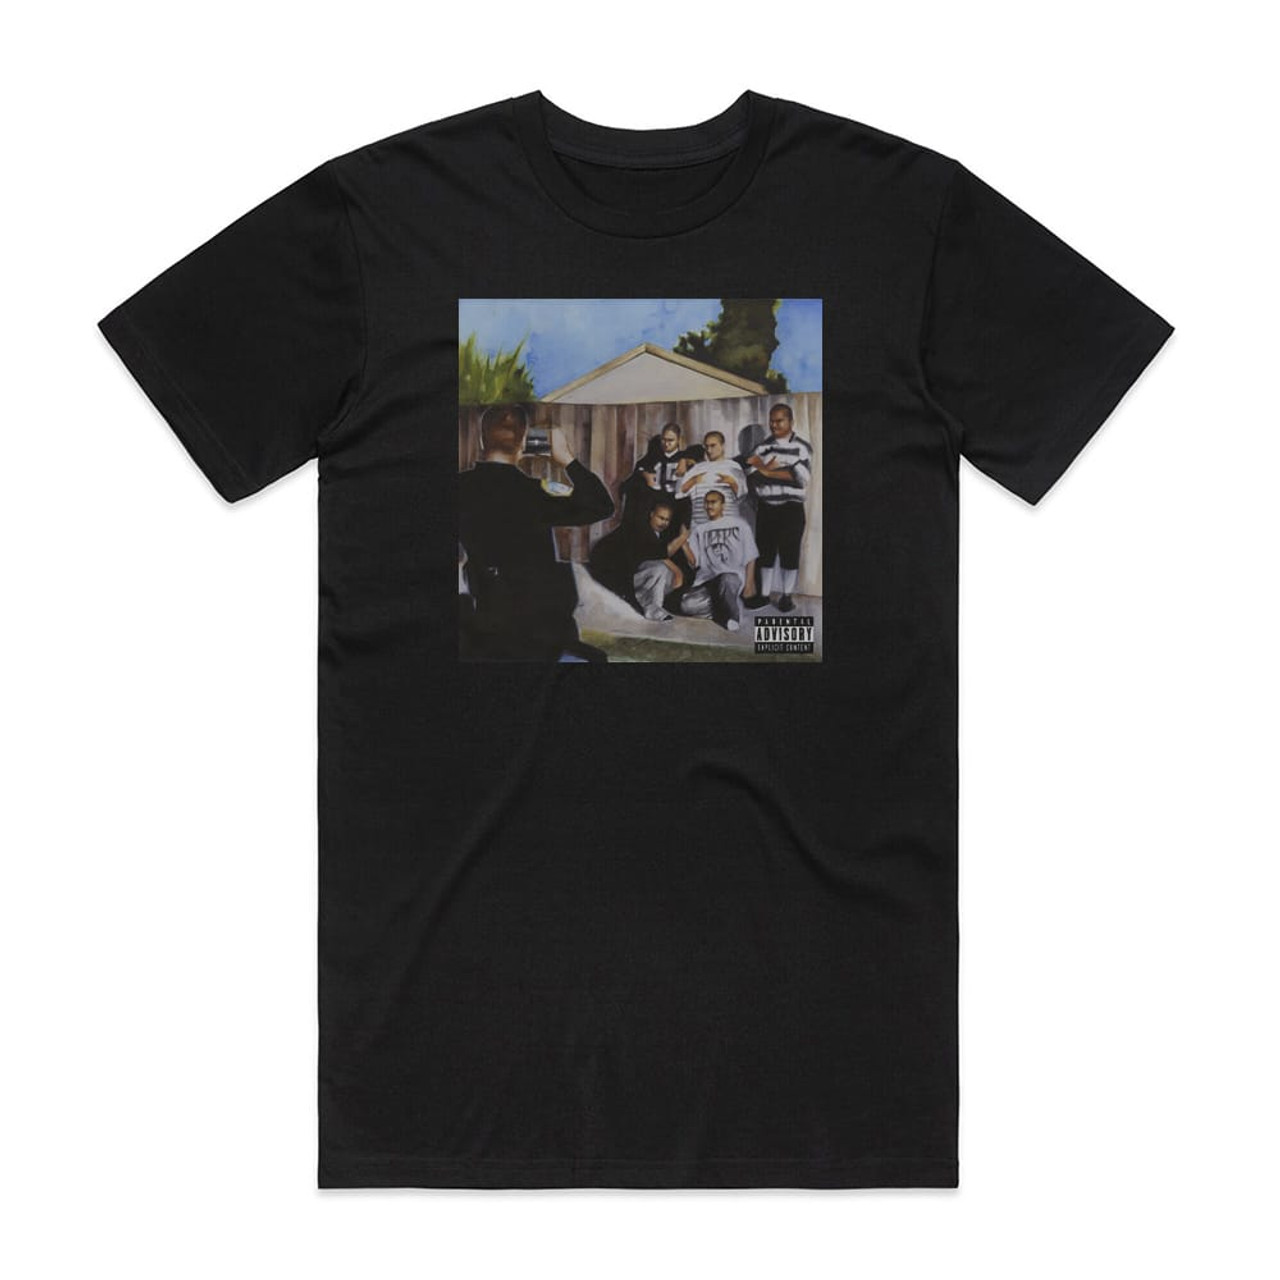 Blu Good To Be Home Album Cover T-Shirt Black